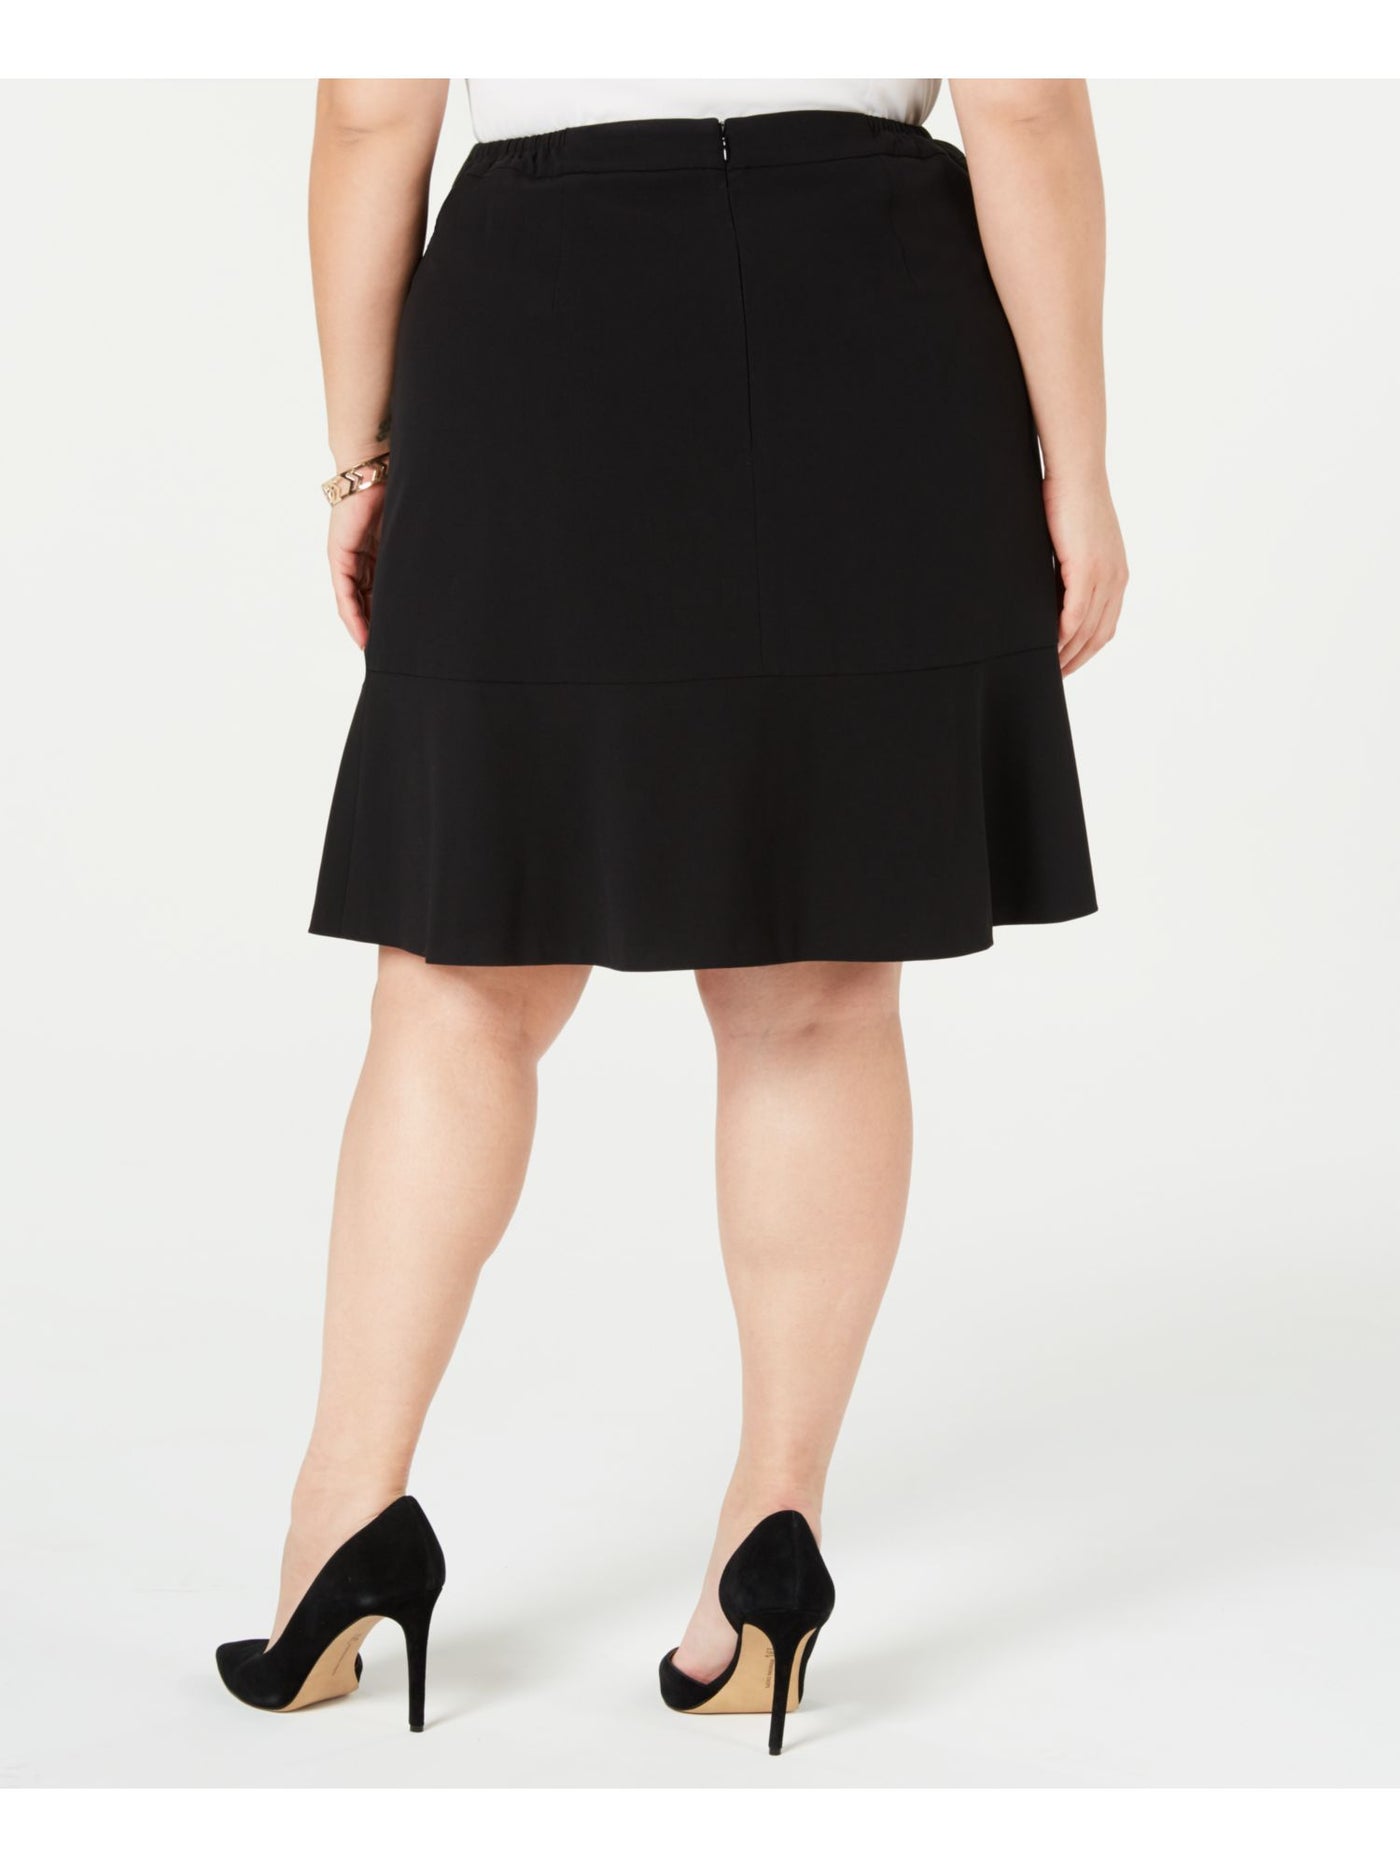 BAR III Womens Black Ruffled Zippered Knee Length Wear To Work A-Line Skirt Plus 18W